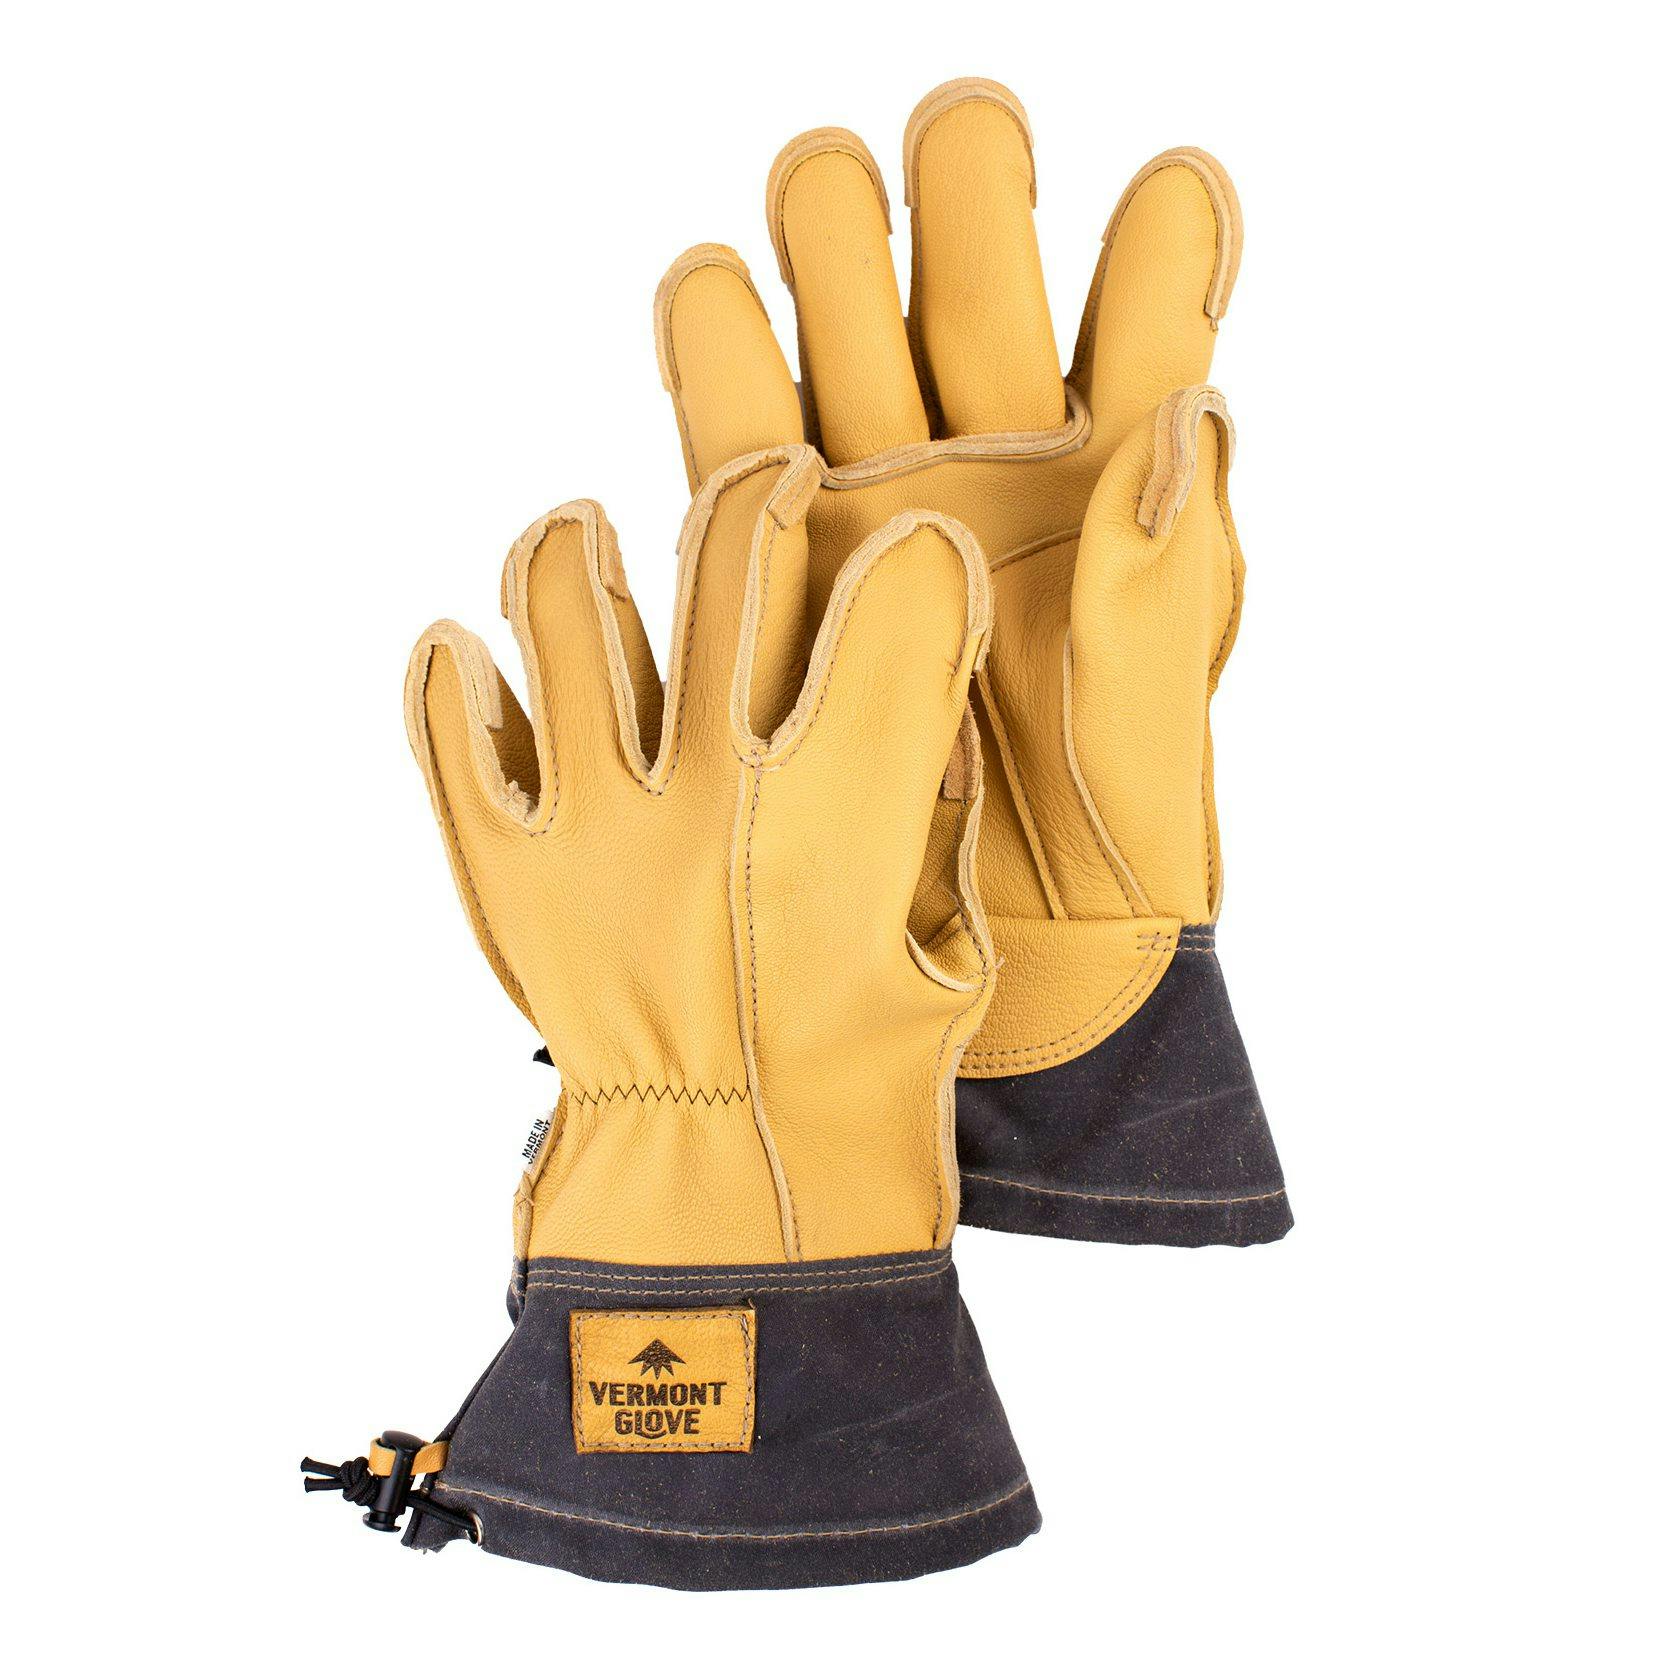 Original Leather Work Glove - Made in USA